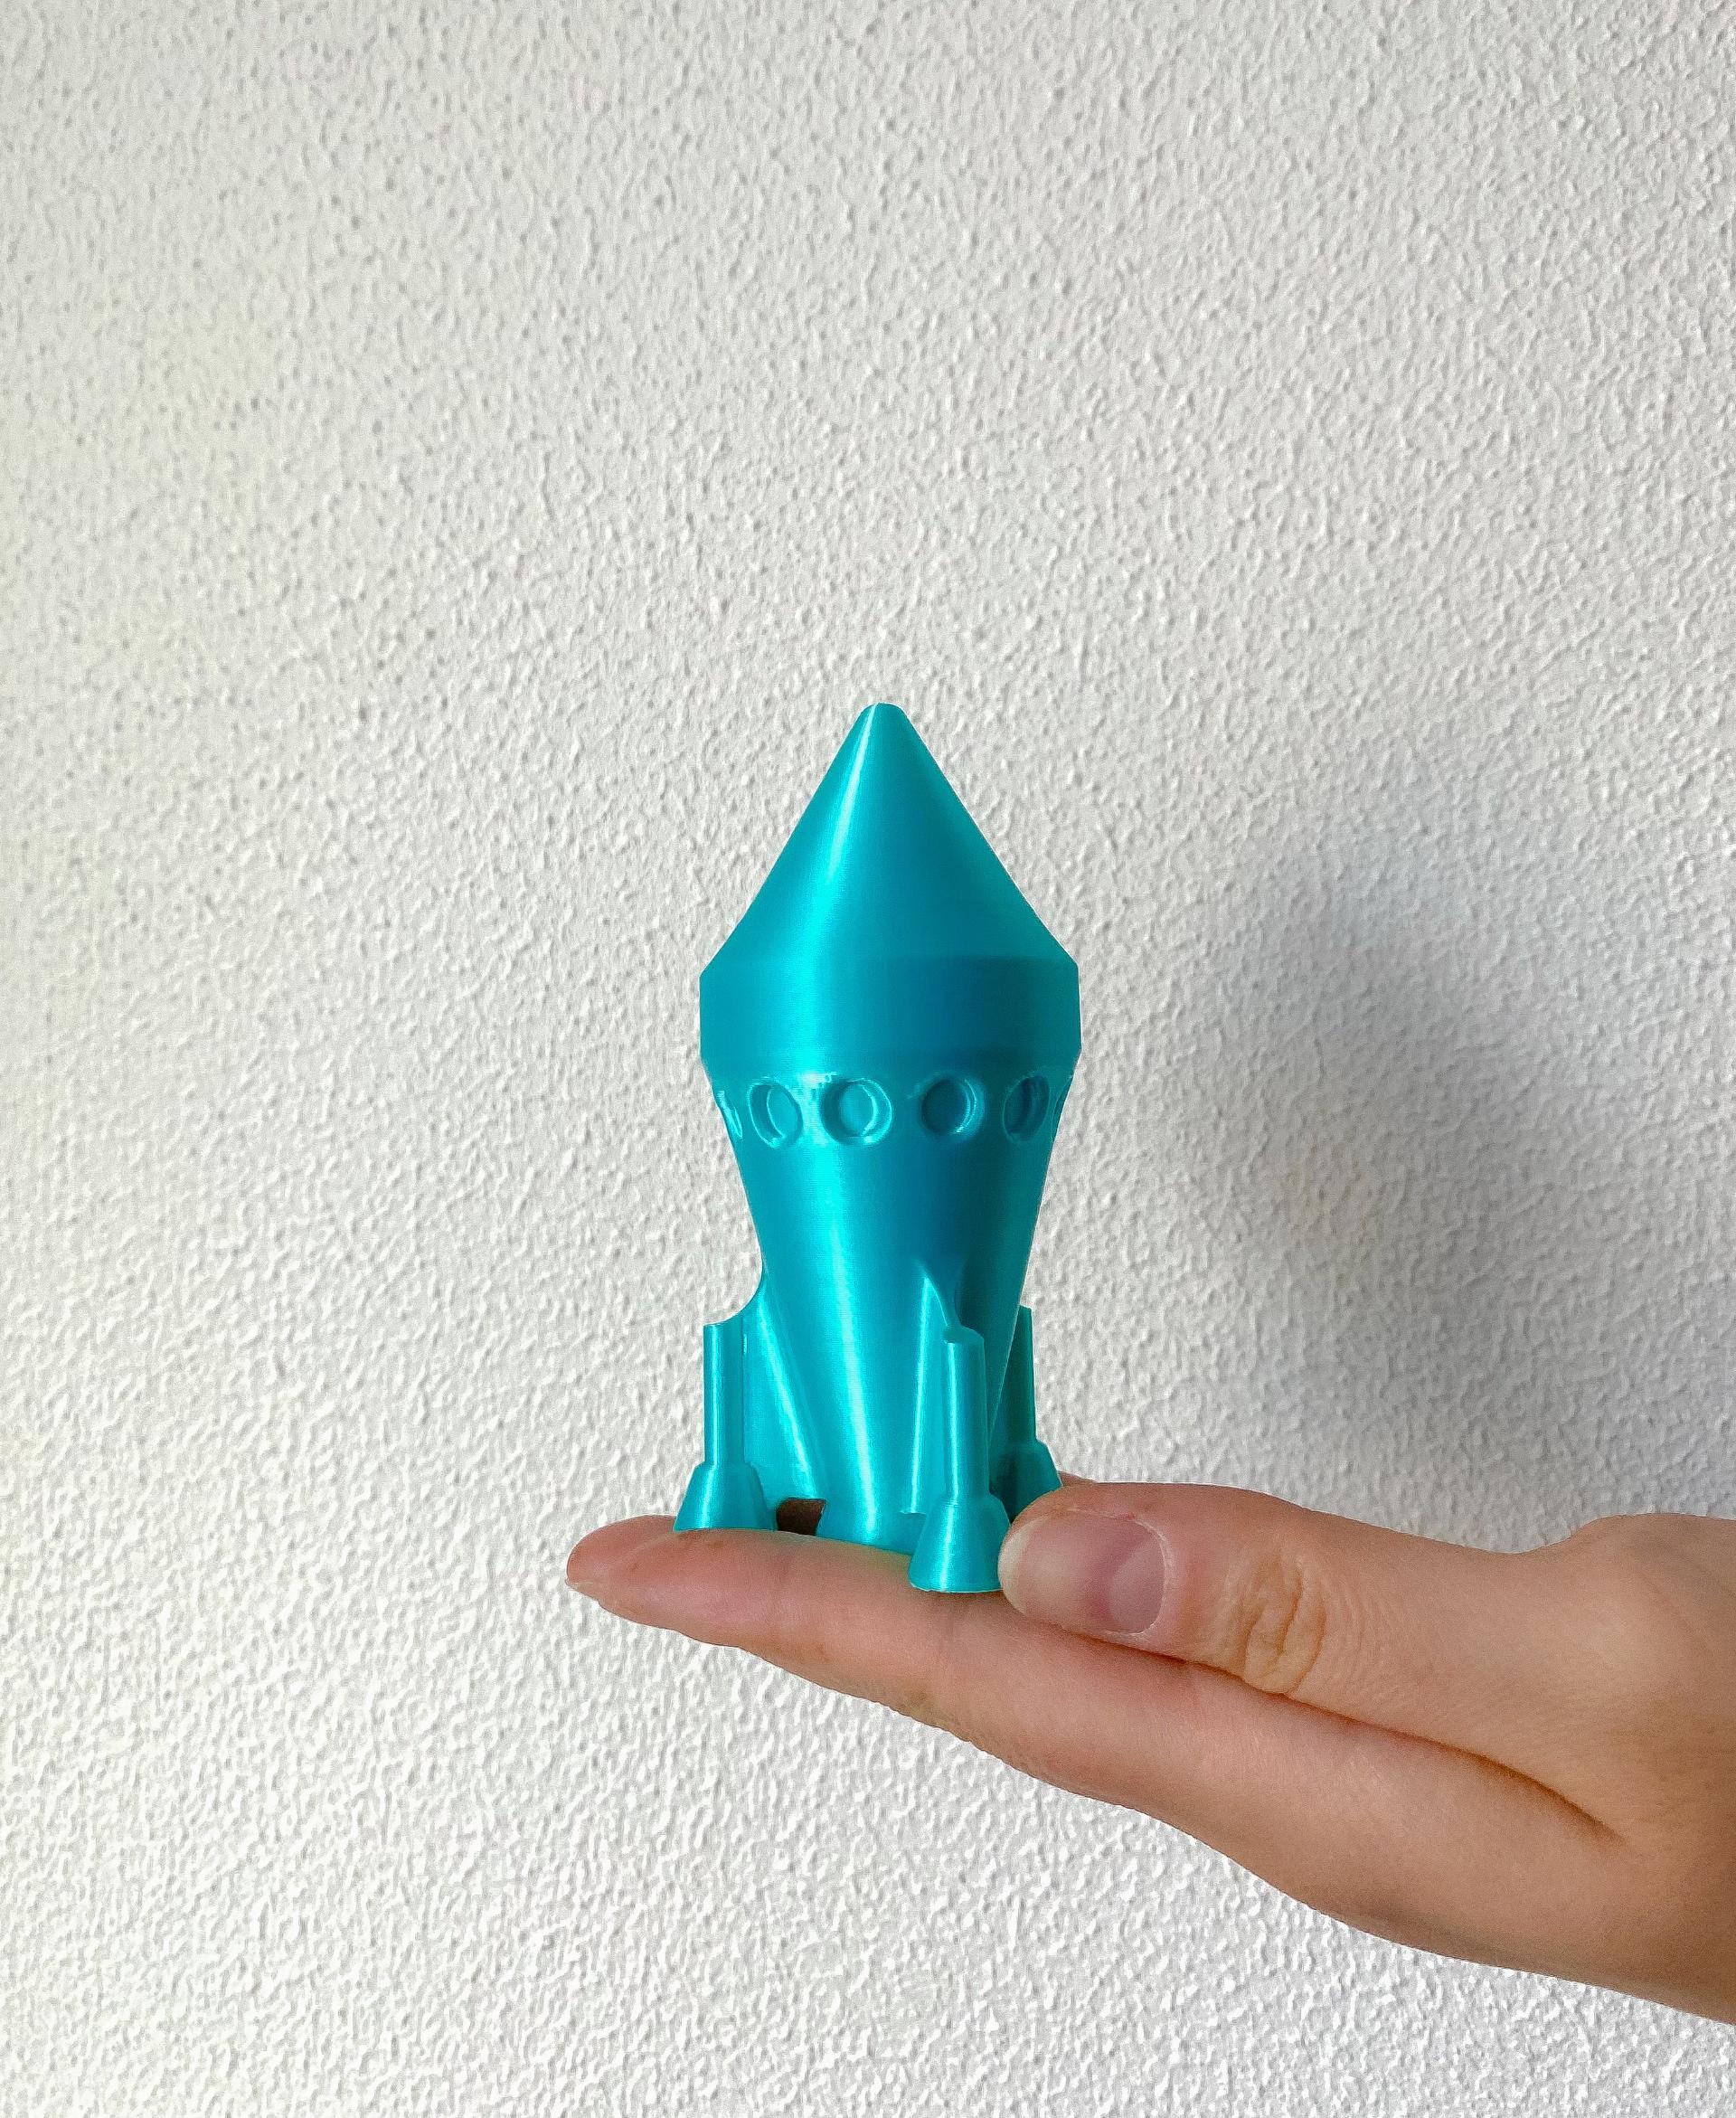 Set Oliver Rocket - Ready for launch!
Polymaker filament - 3d model